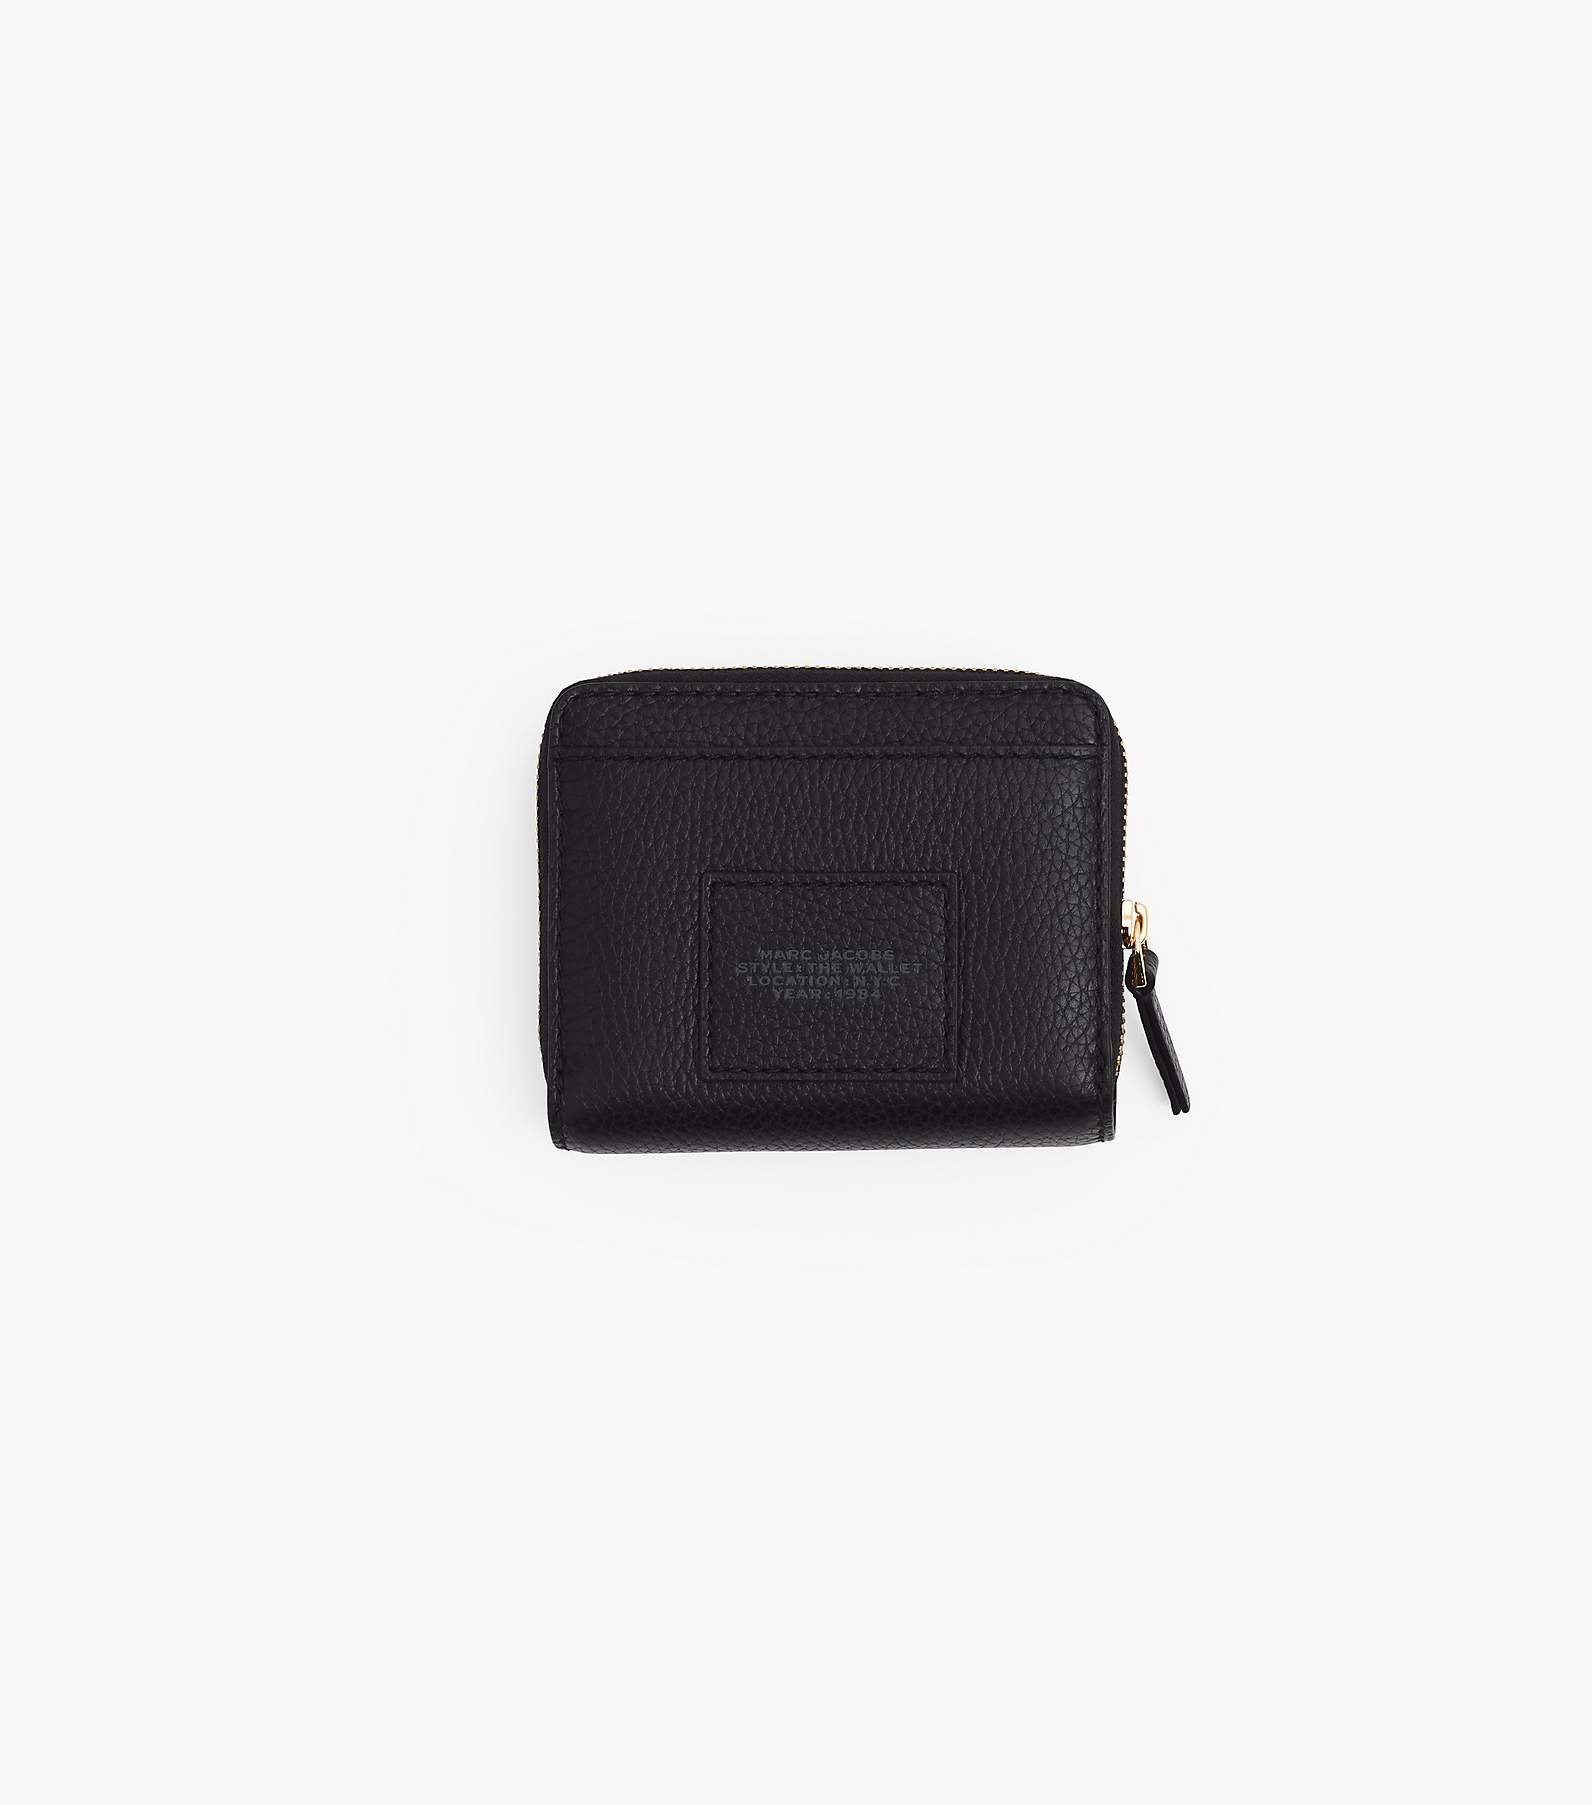 Marc Jacobs Snapshot Dtm Compact Wallet in Black